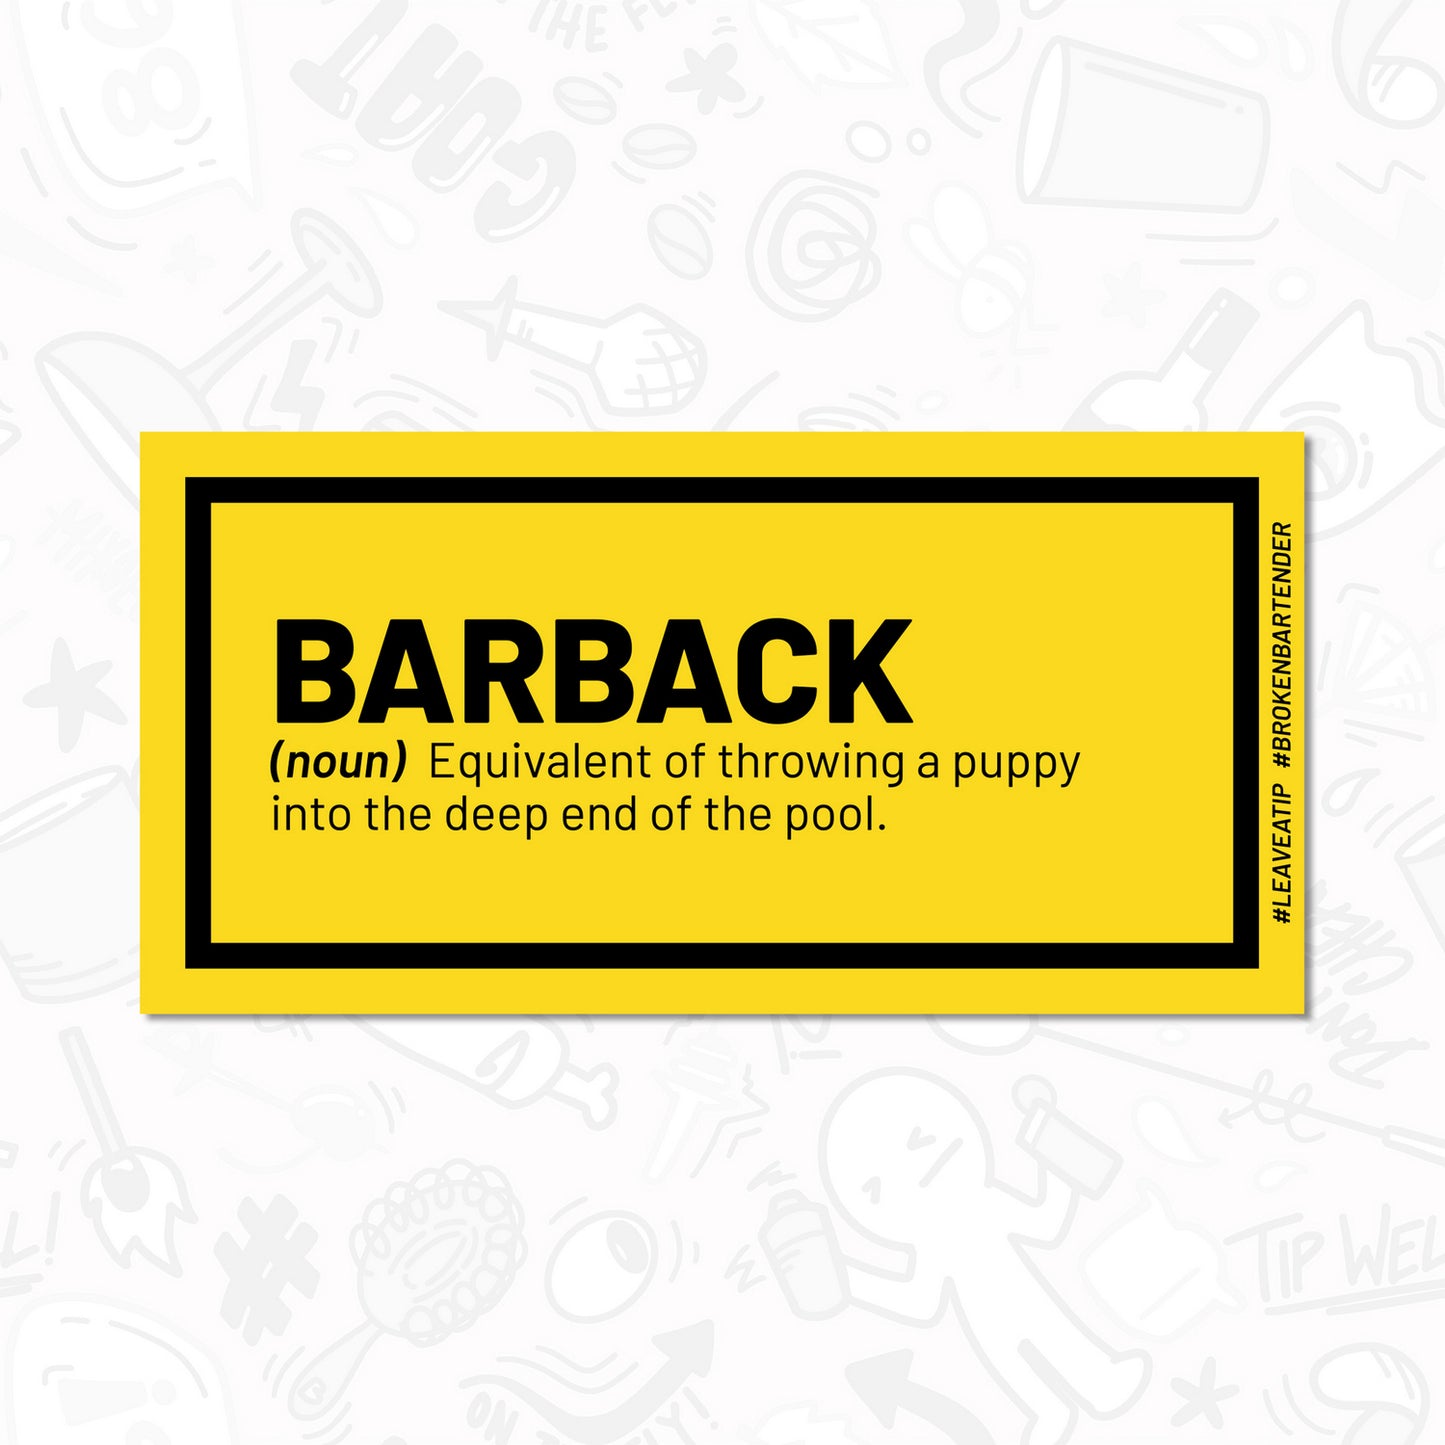 Barback Sticker Pack